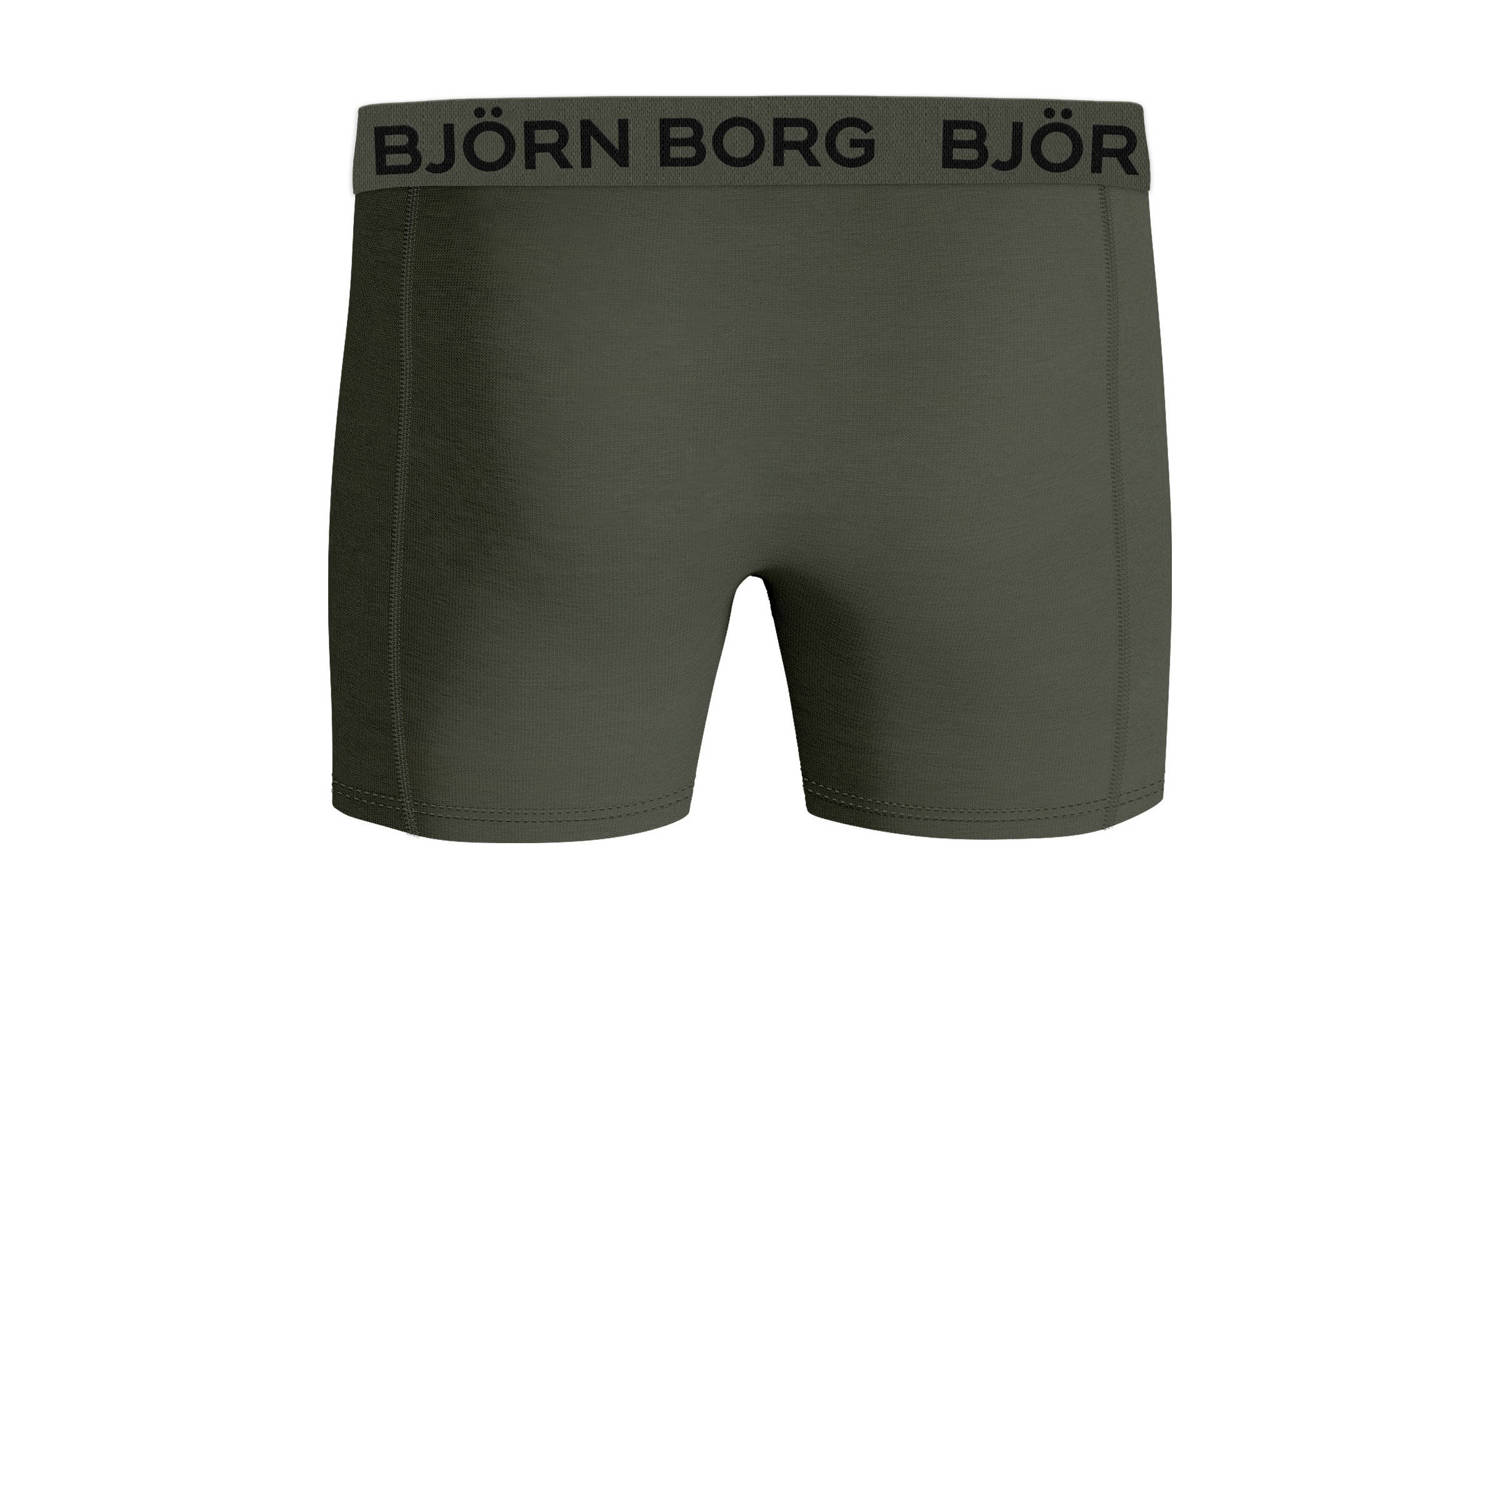 Björn Borg boxershort set van 5